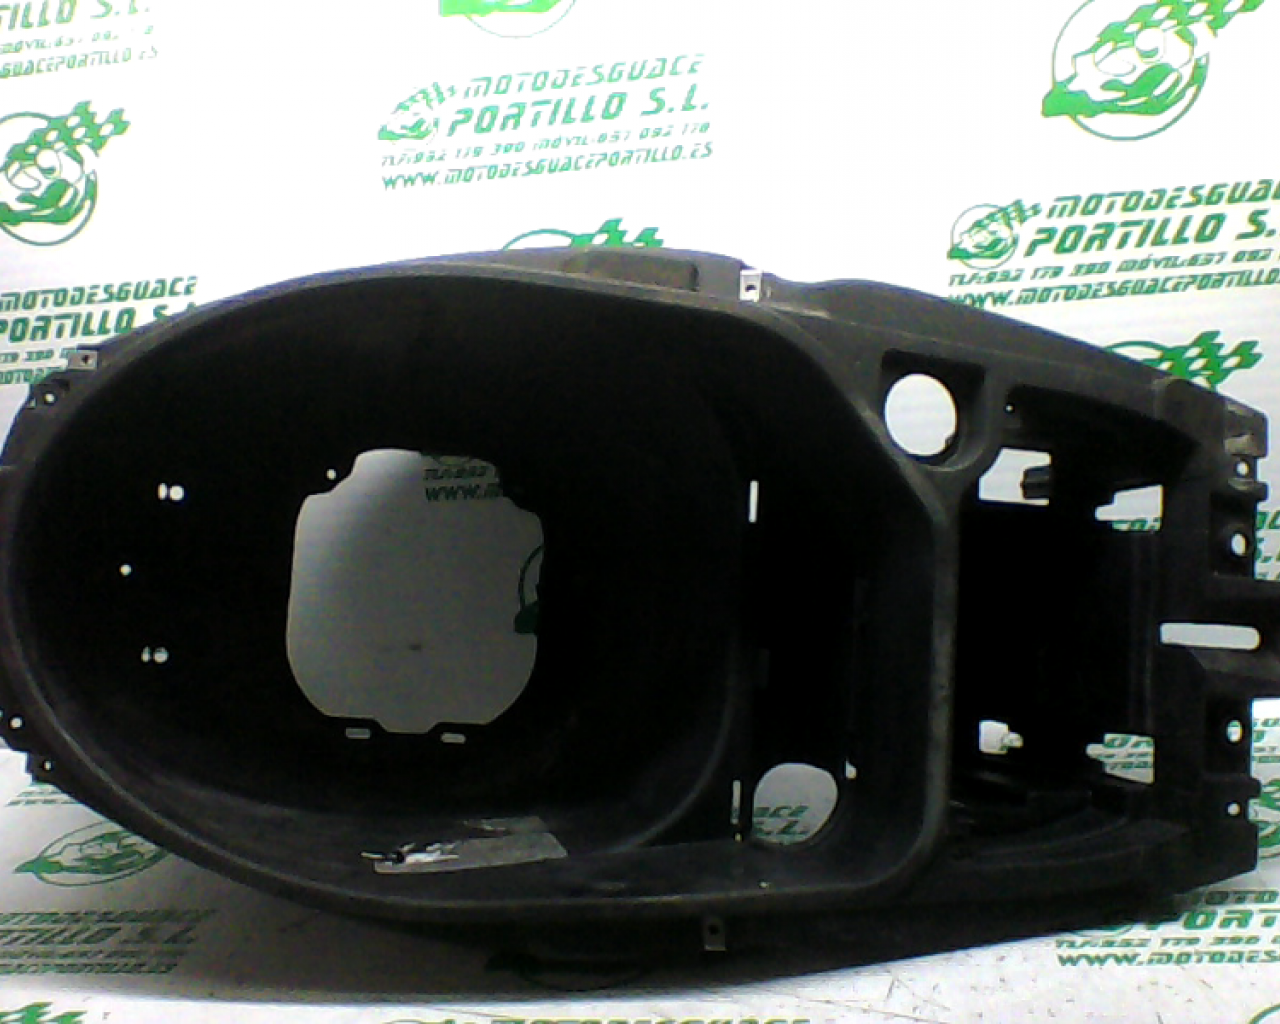 Porta-casco Piaggio NRG Power   50 (2007-2009)